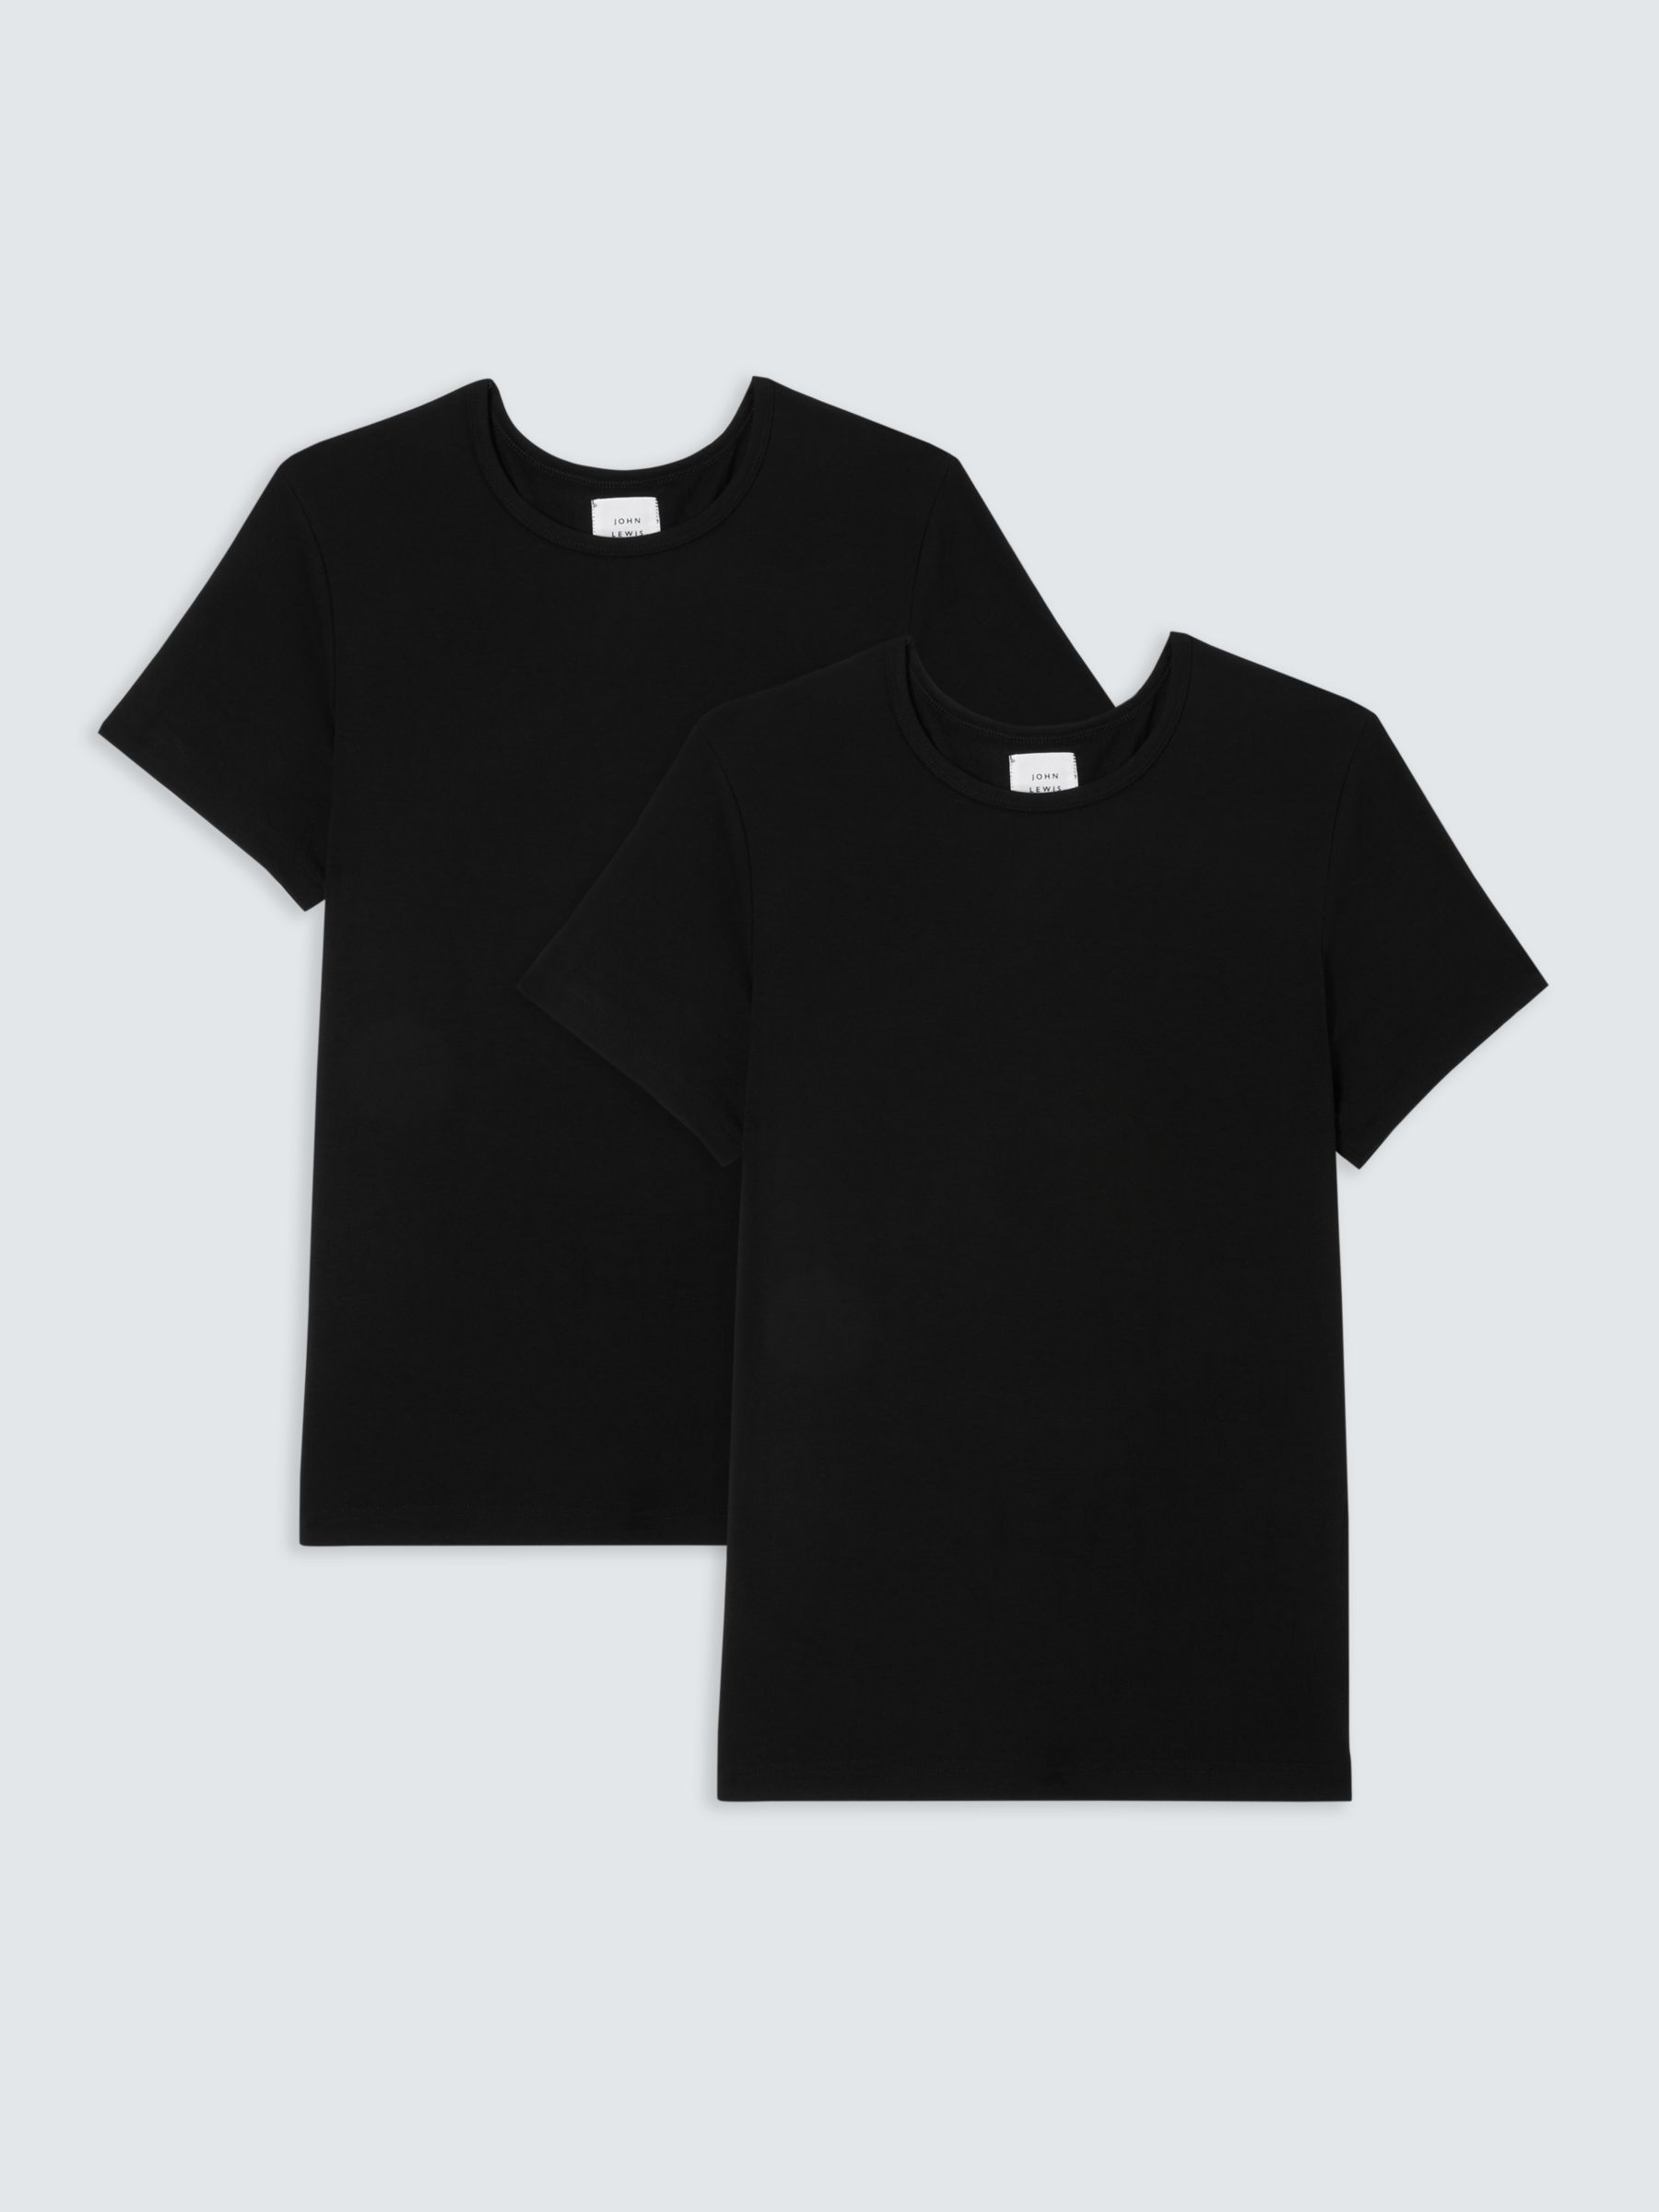 John Lewis Short Sleeve Thermal T-Shirt, Pack of 2, Black at John